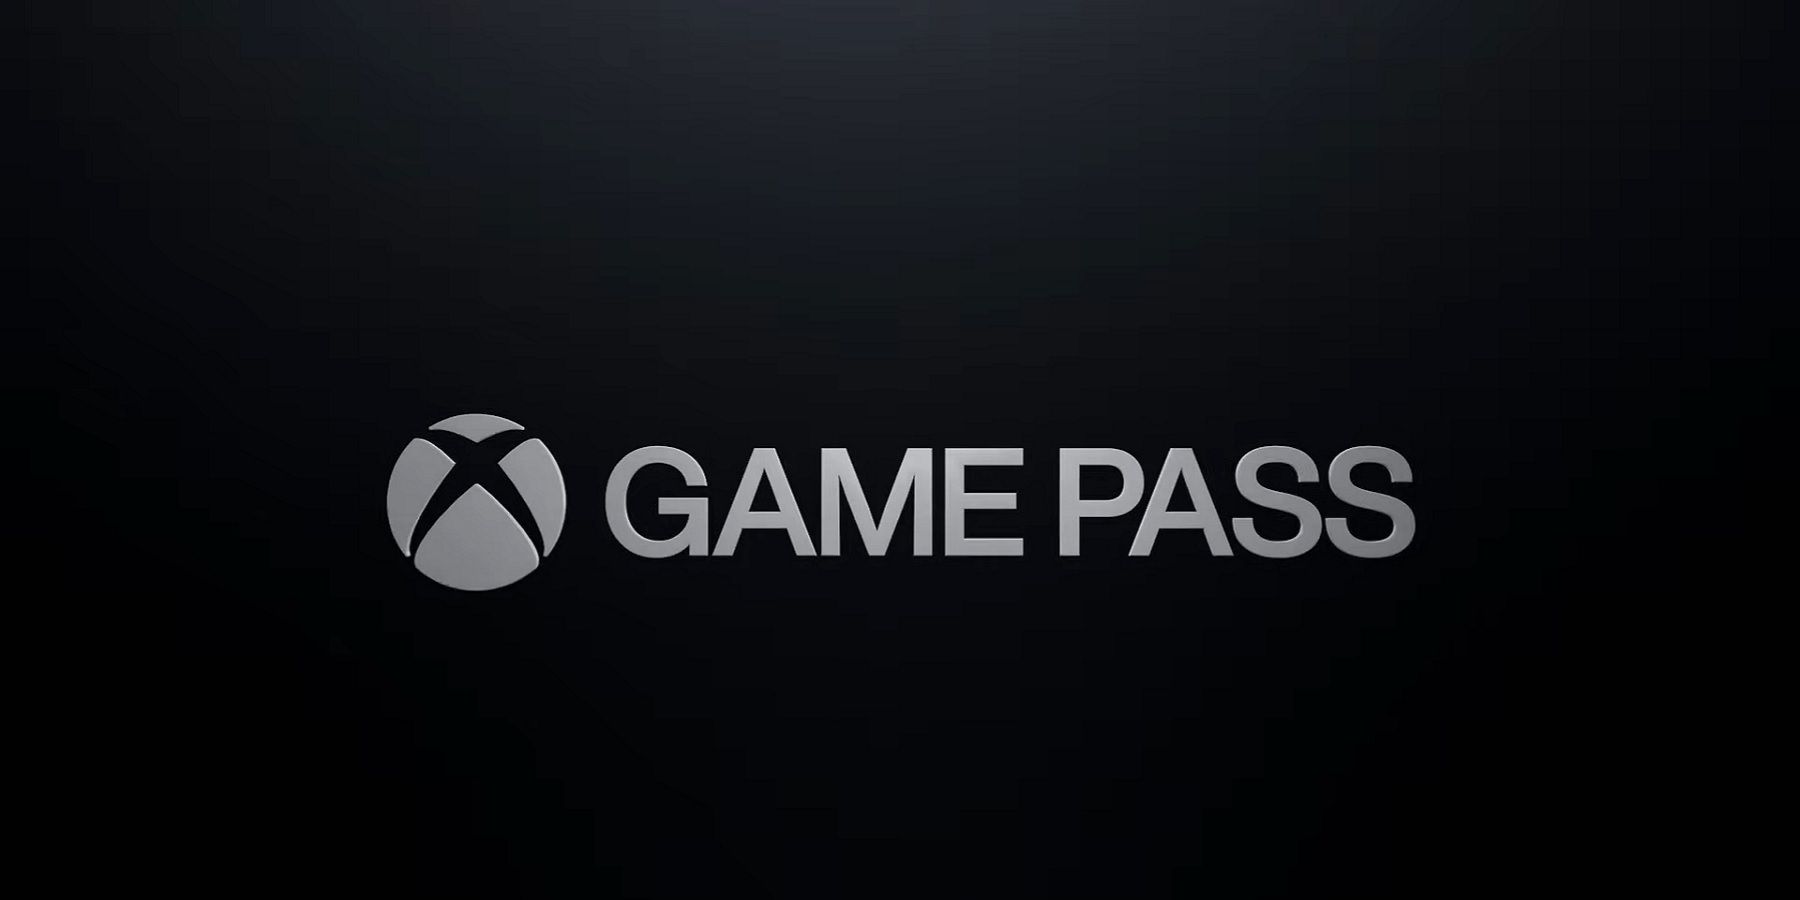 xbox game pass logo black and white